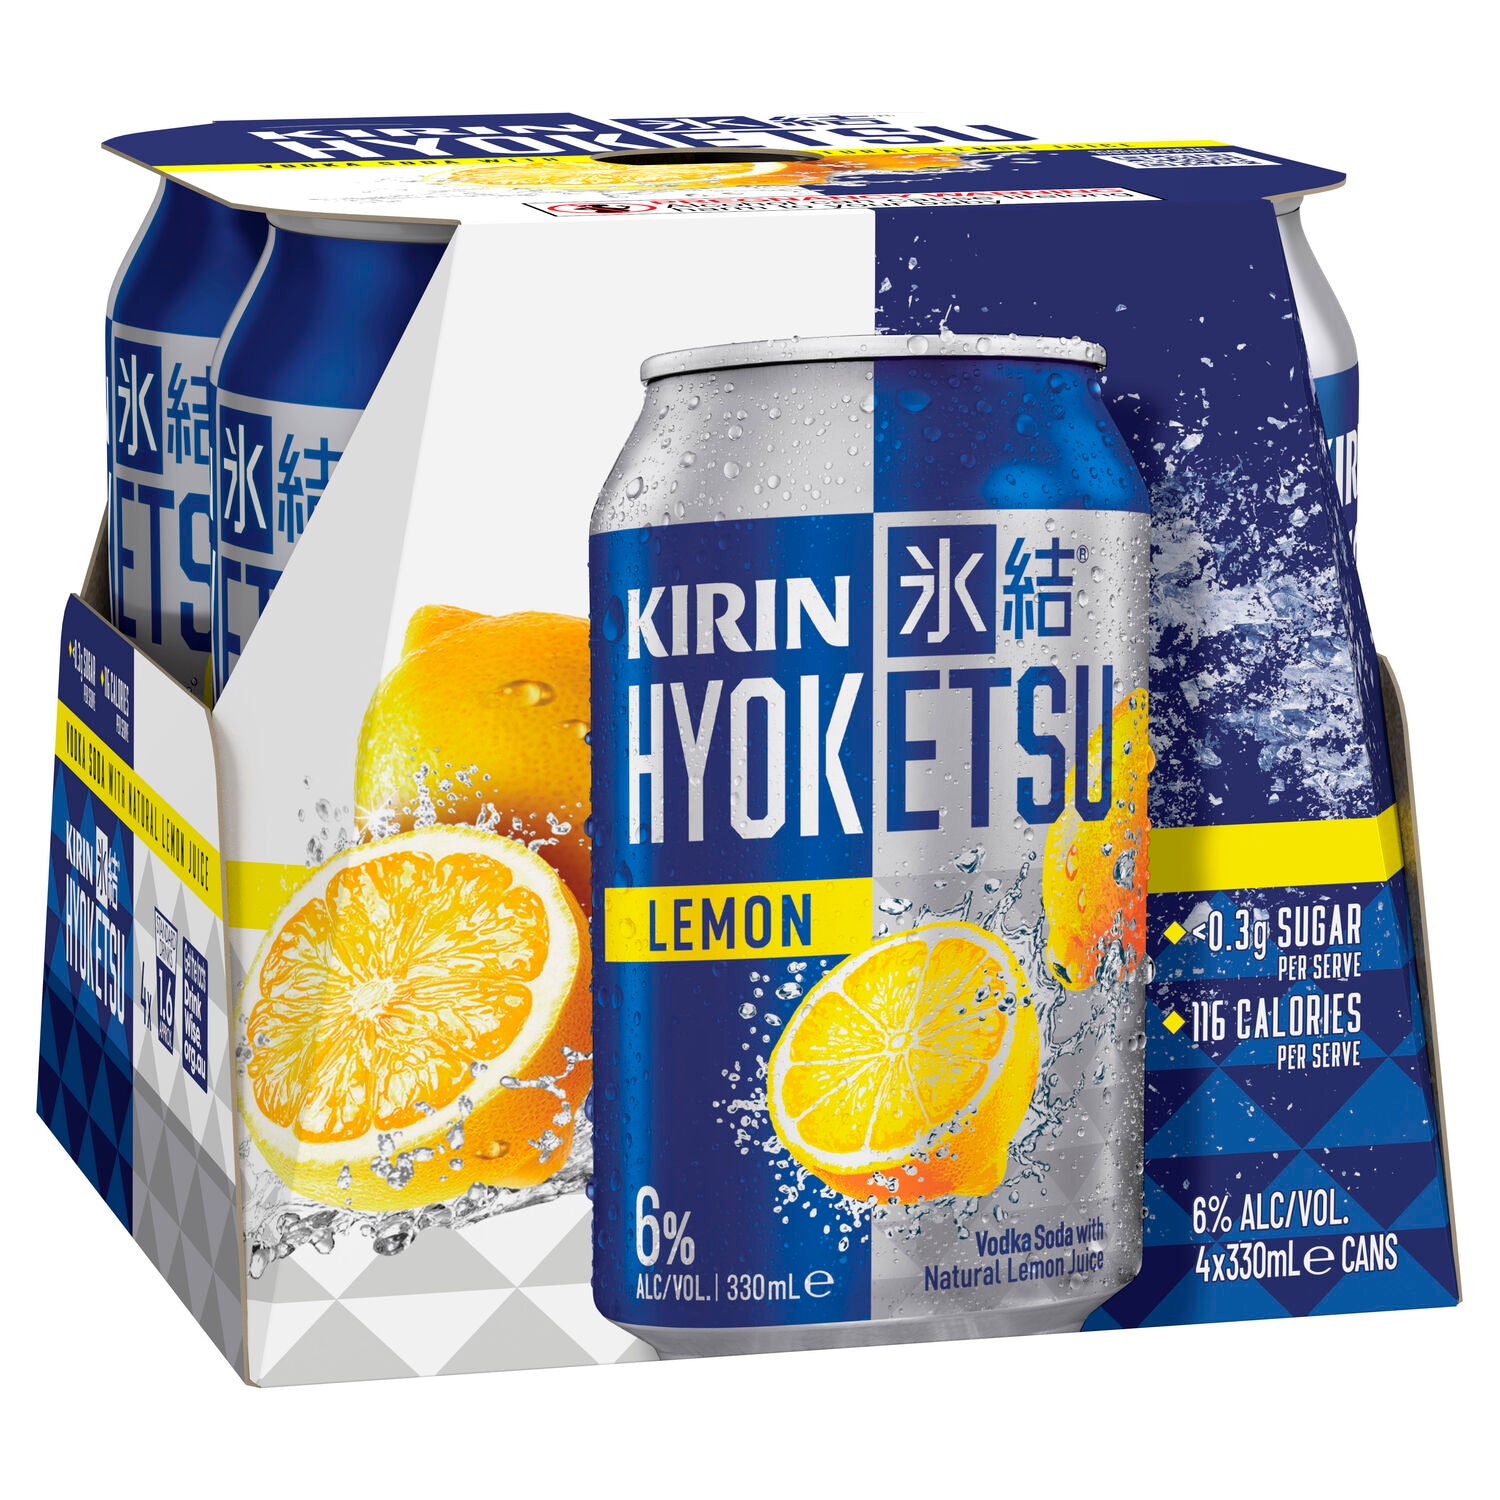 Kirin Hyoketsu Lemon 4x330mL Can